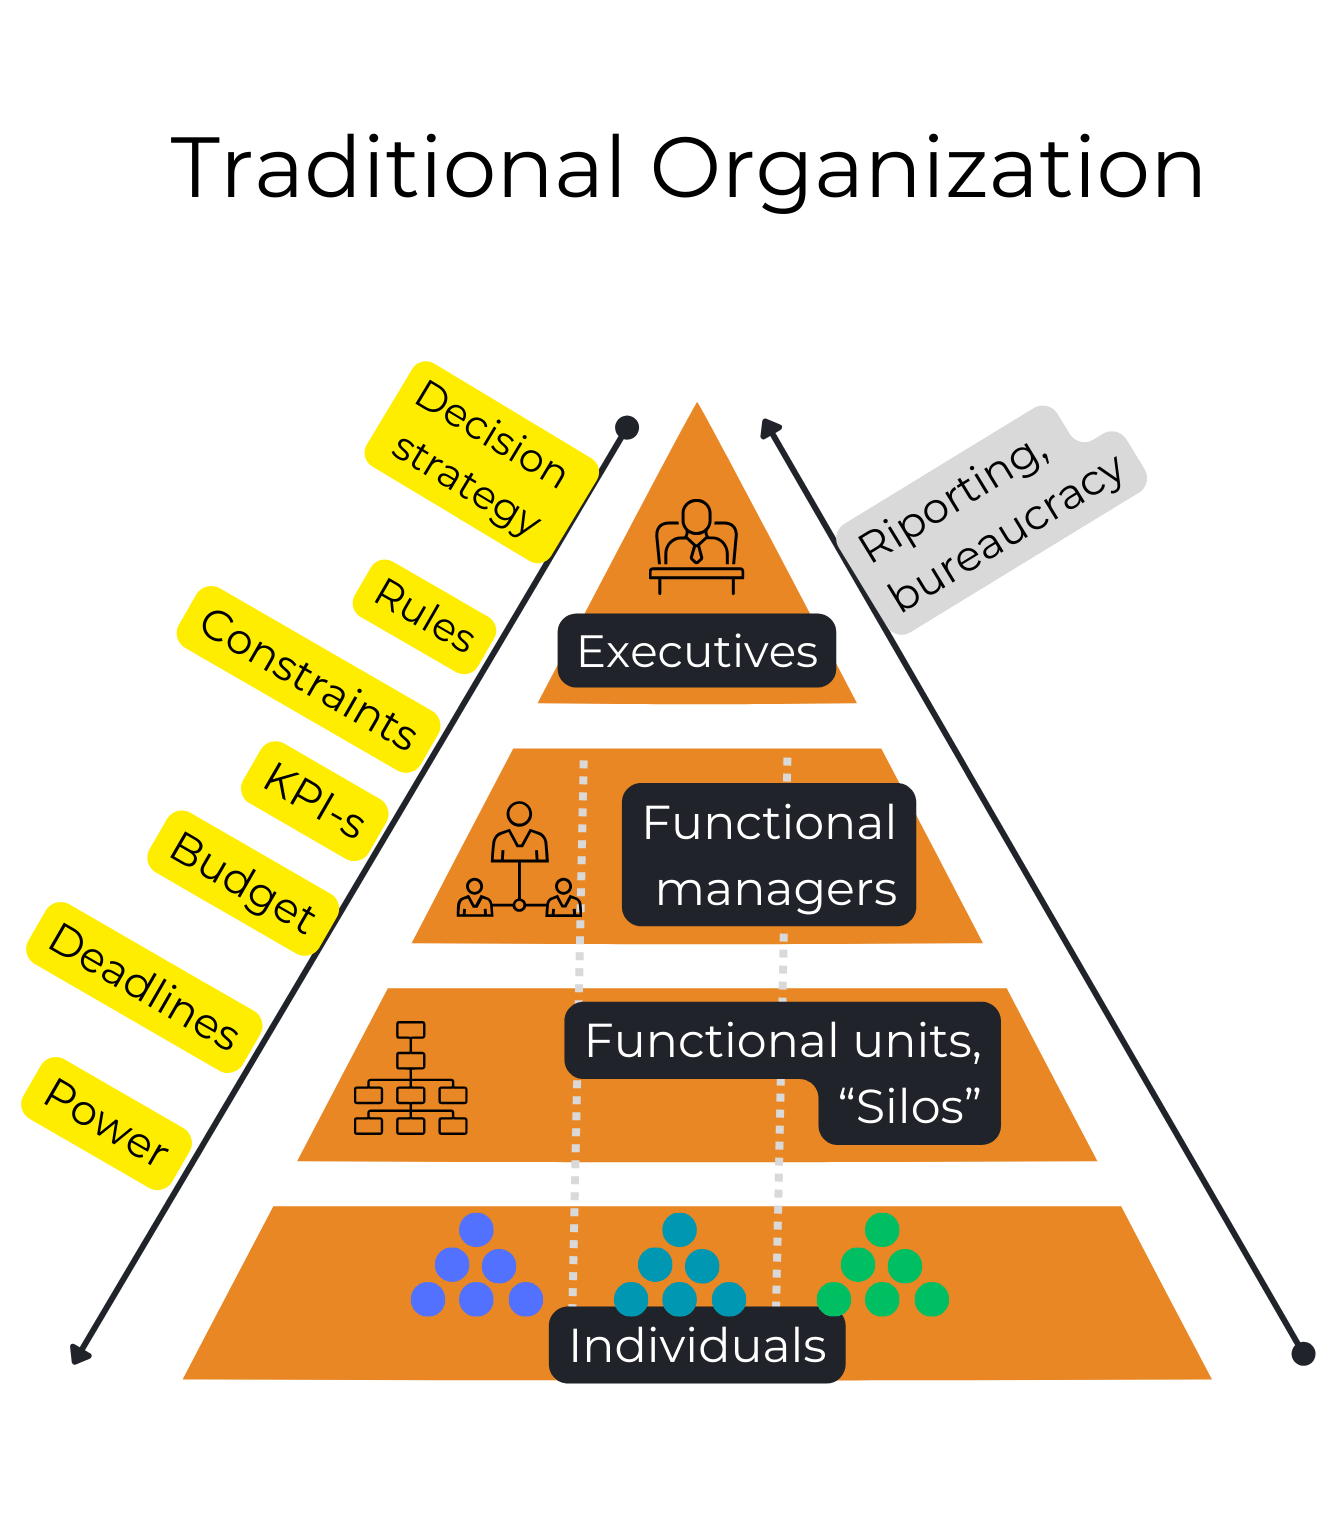 Traditional organization